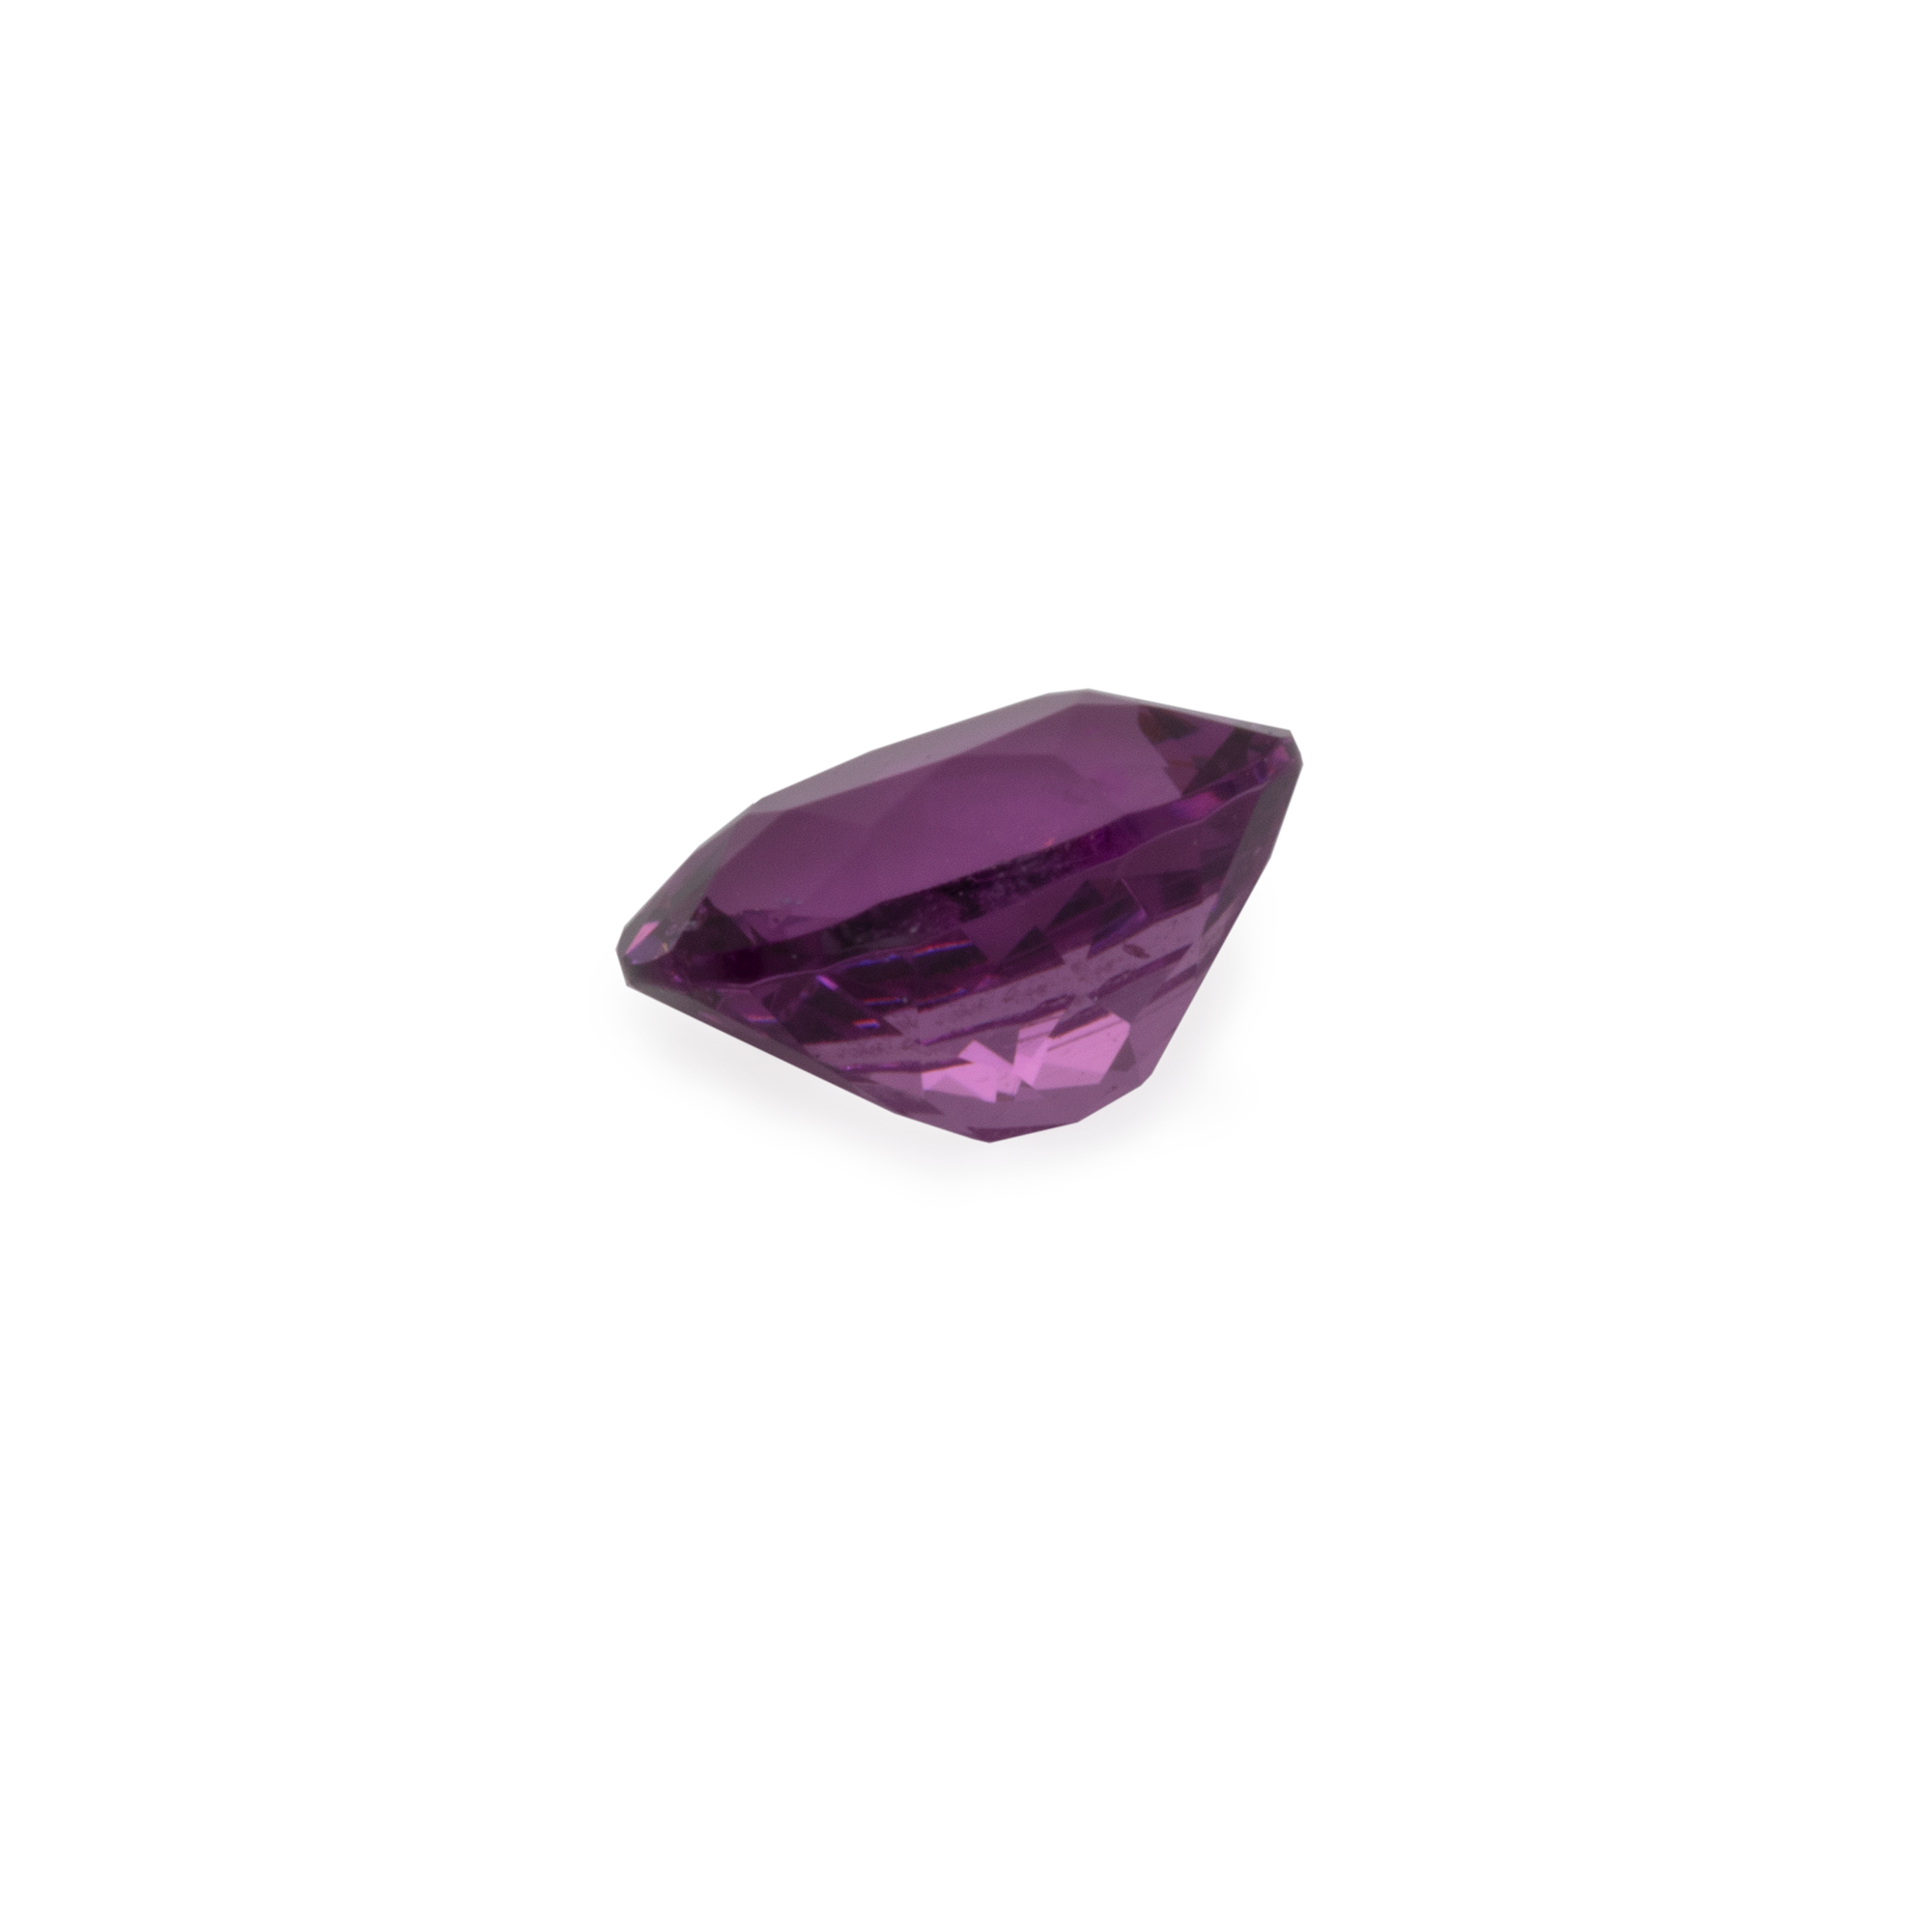 Royal Purple Garnet - purple, oval, 4x3 mm, 0.19-0.24 cts, No. RP12001